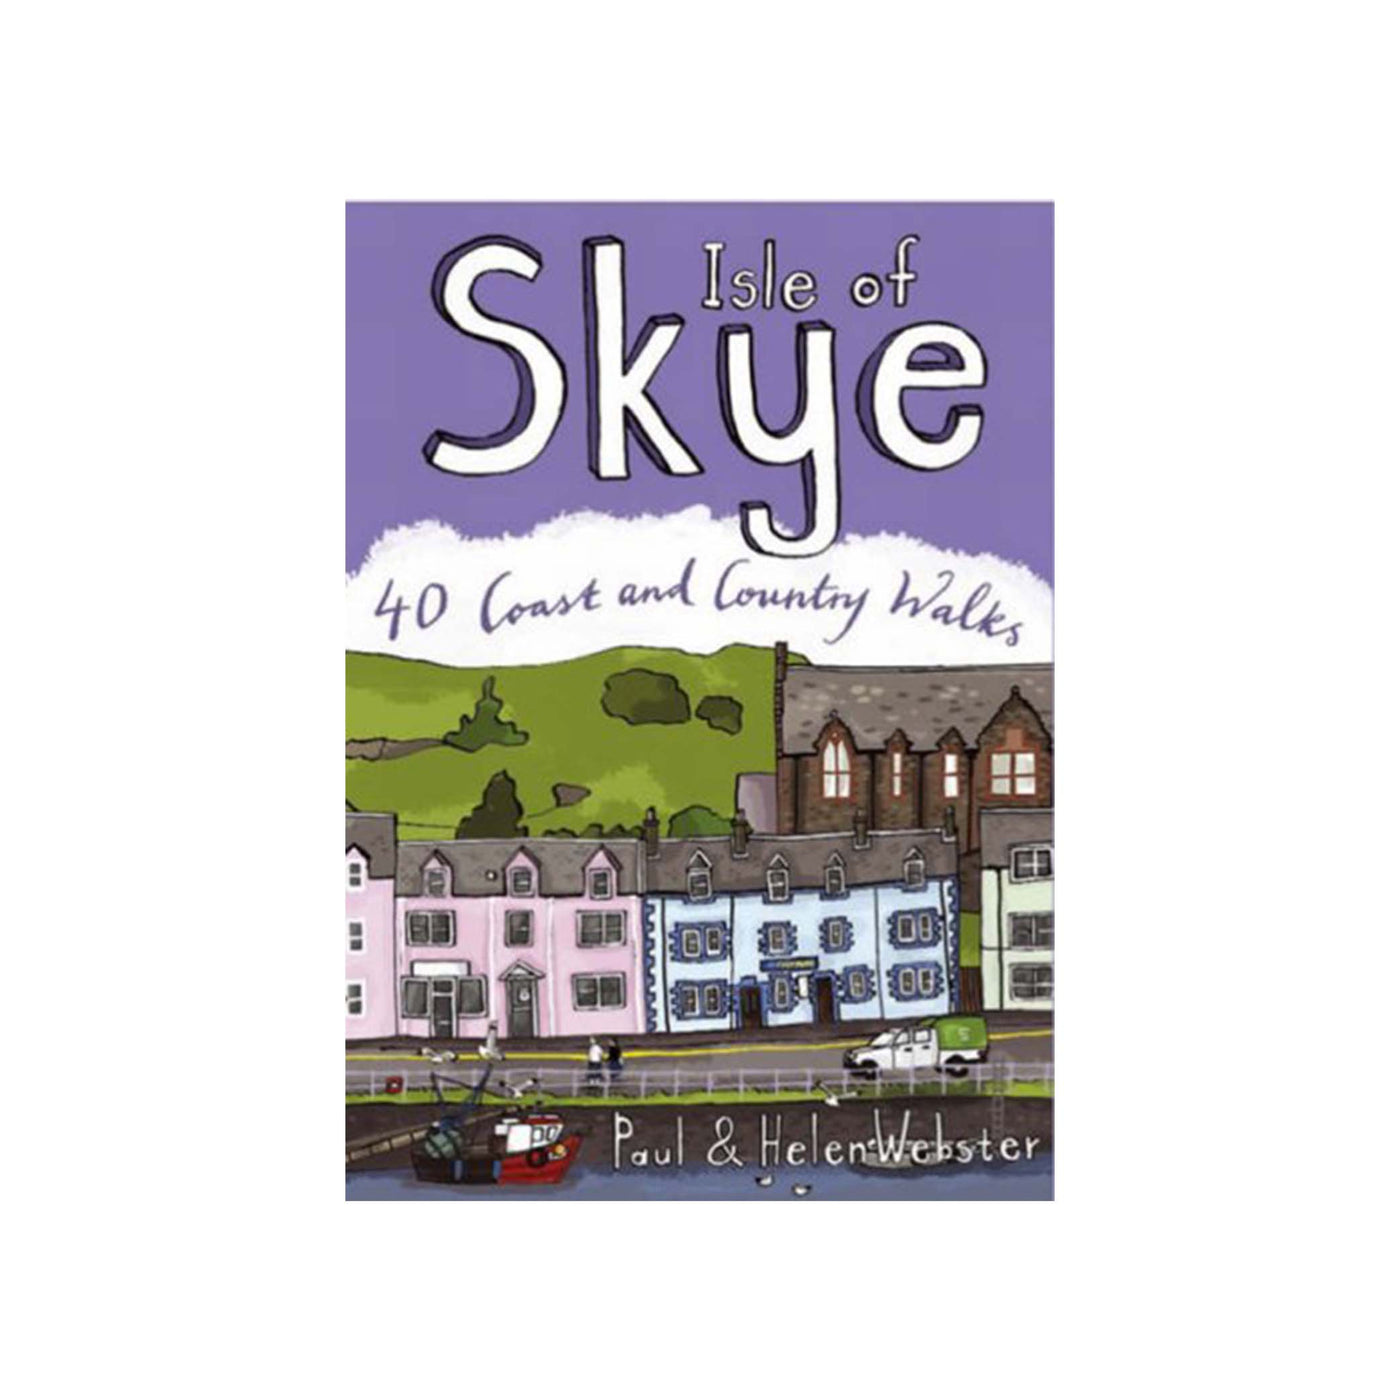 Isle of Skye; 40 Coast and Country Walks